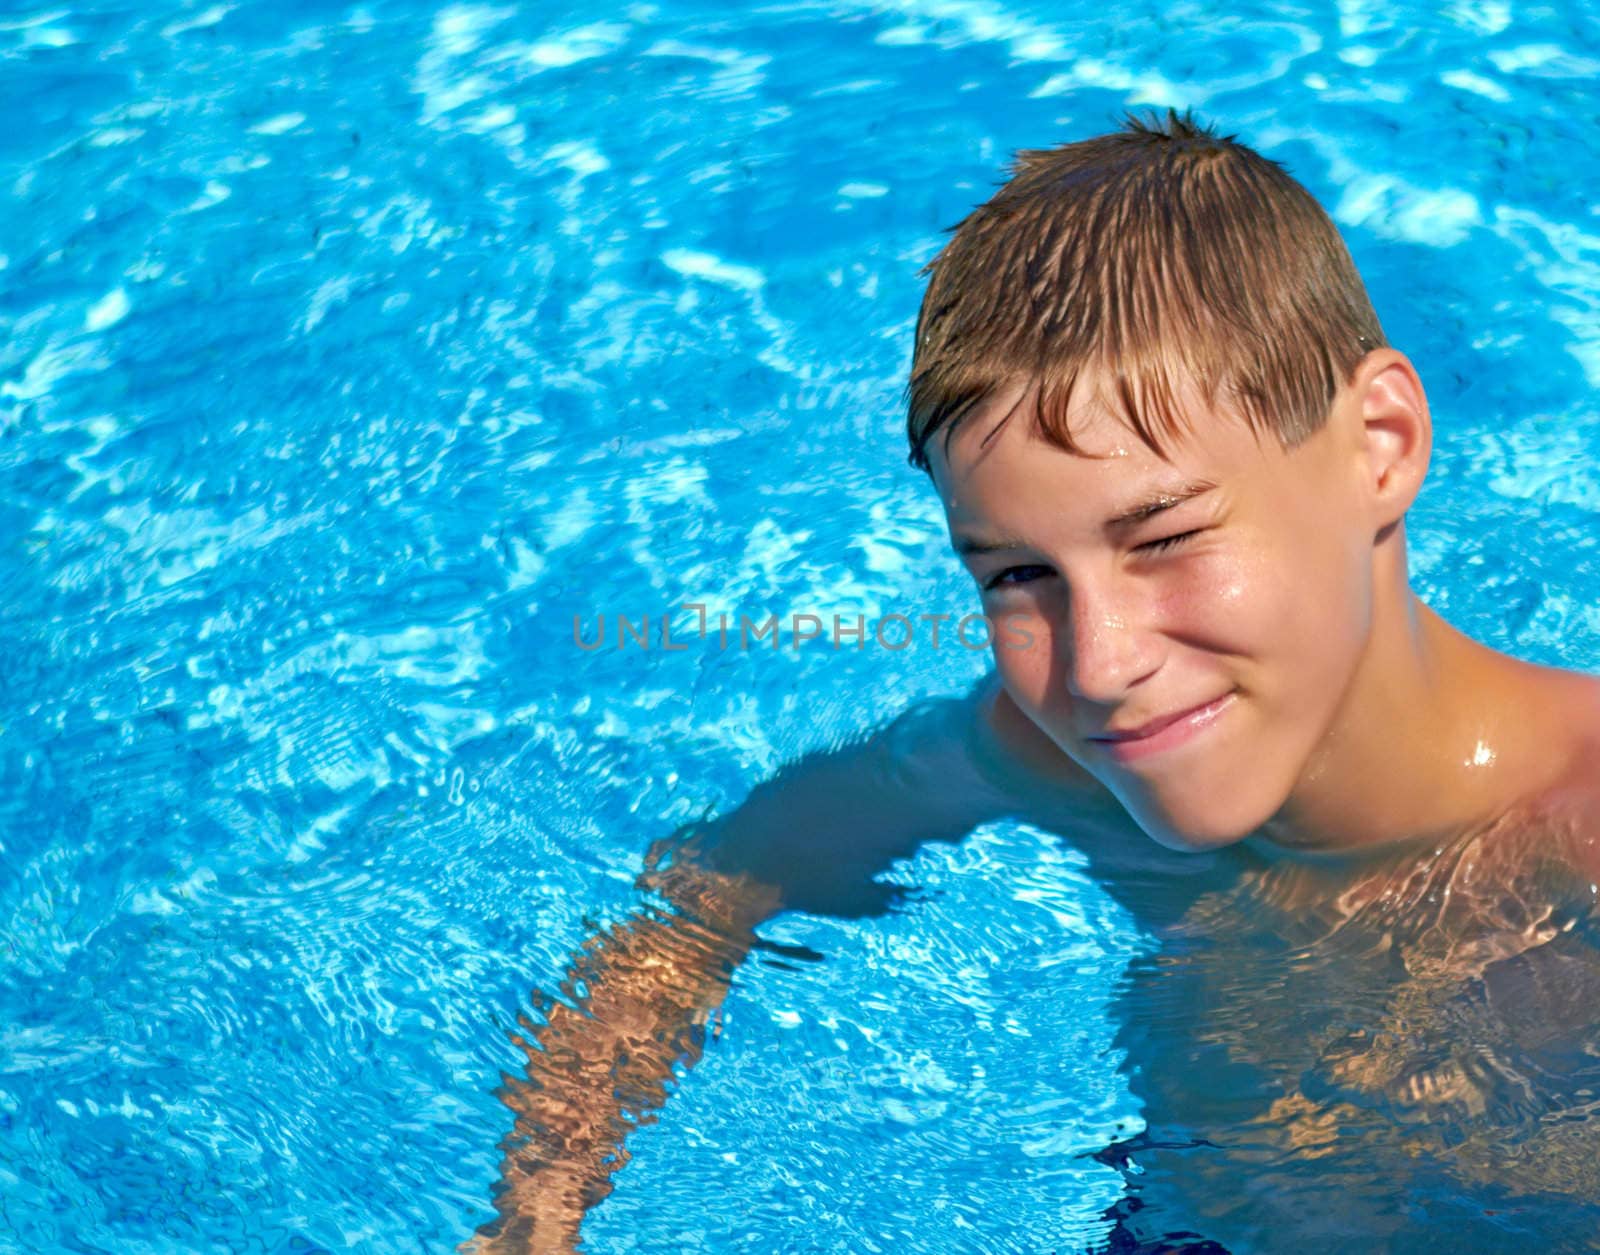 Smiling teenage boy having fun in the outdoor swimming pool.